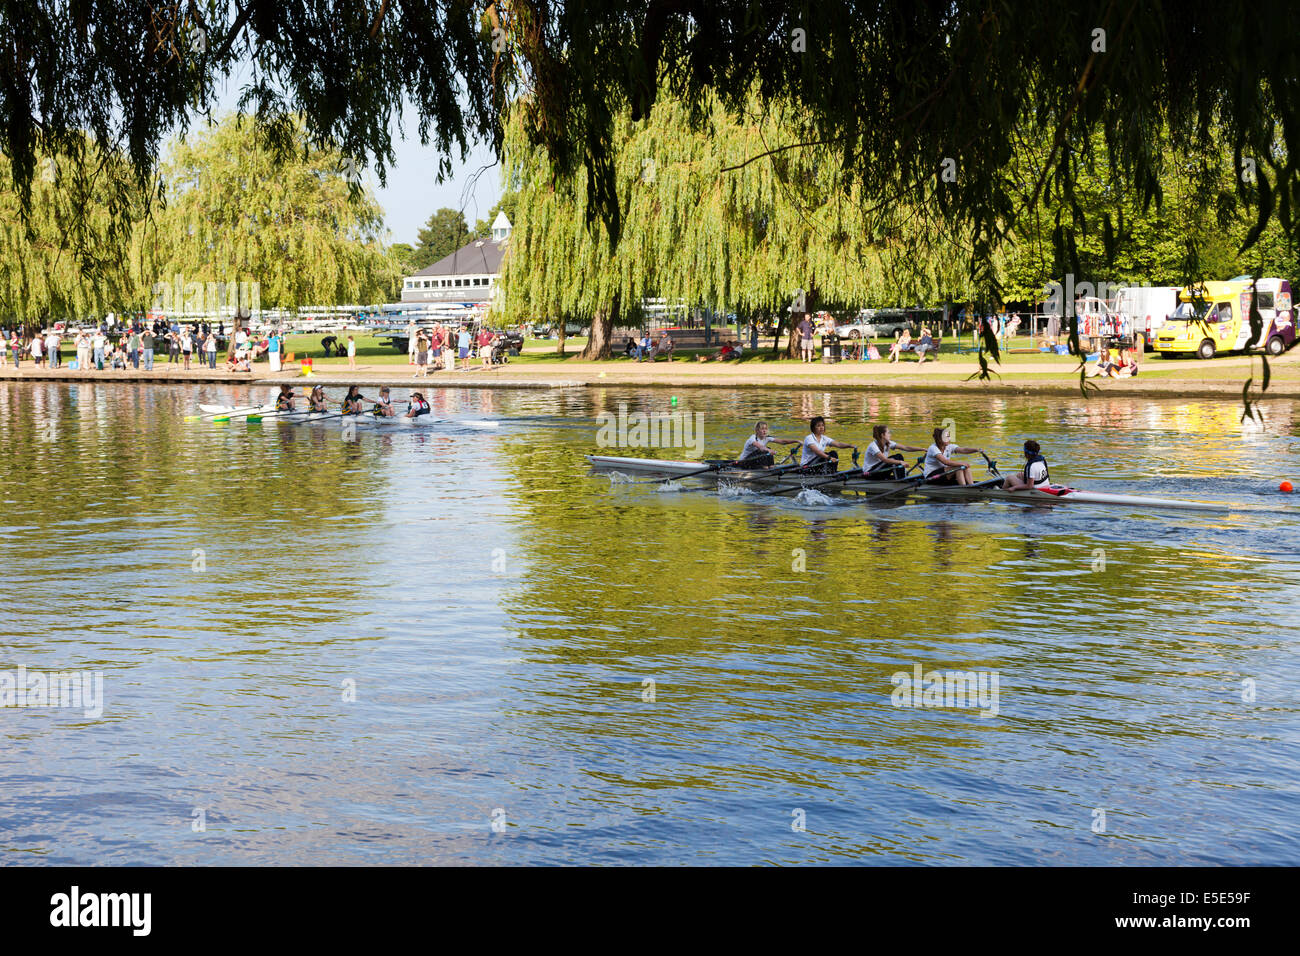 A rowing regatta on the River Avon at Stratford upon Avon, Warwickshire UK Stock Photo